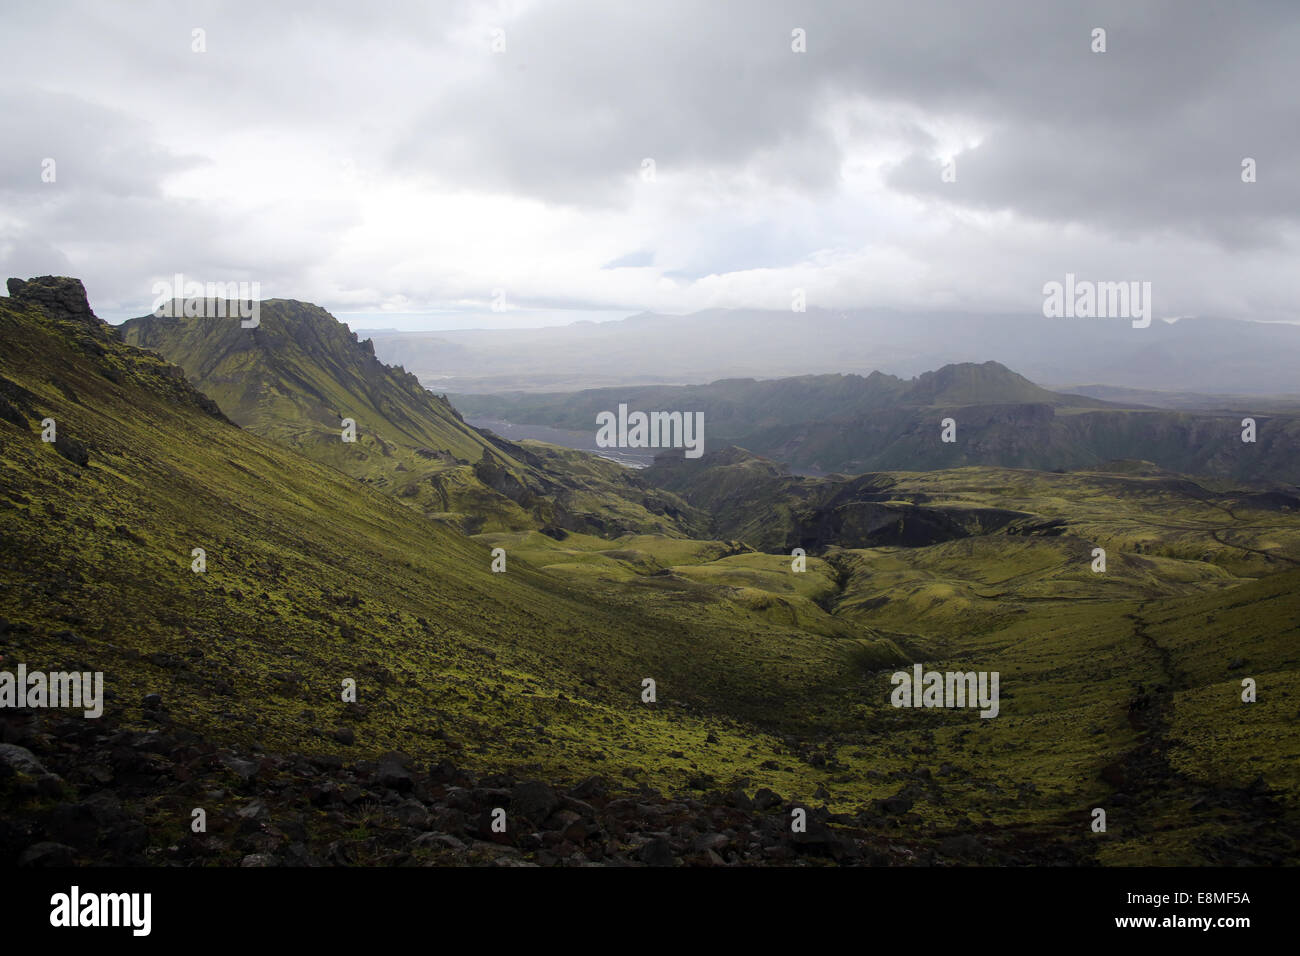 La vallée de Thorsmork Randonnée volcan en Islande Août 2014 Photo de jen lombardo Banque D'Images